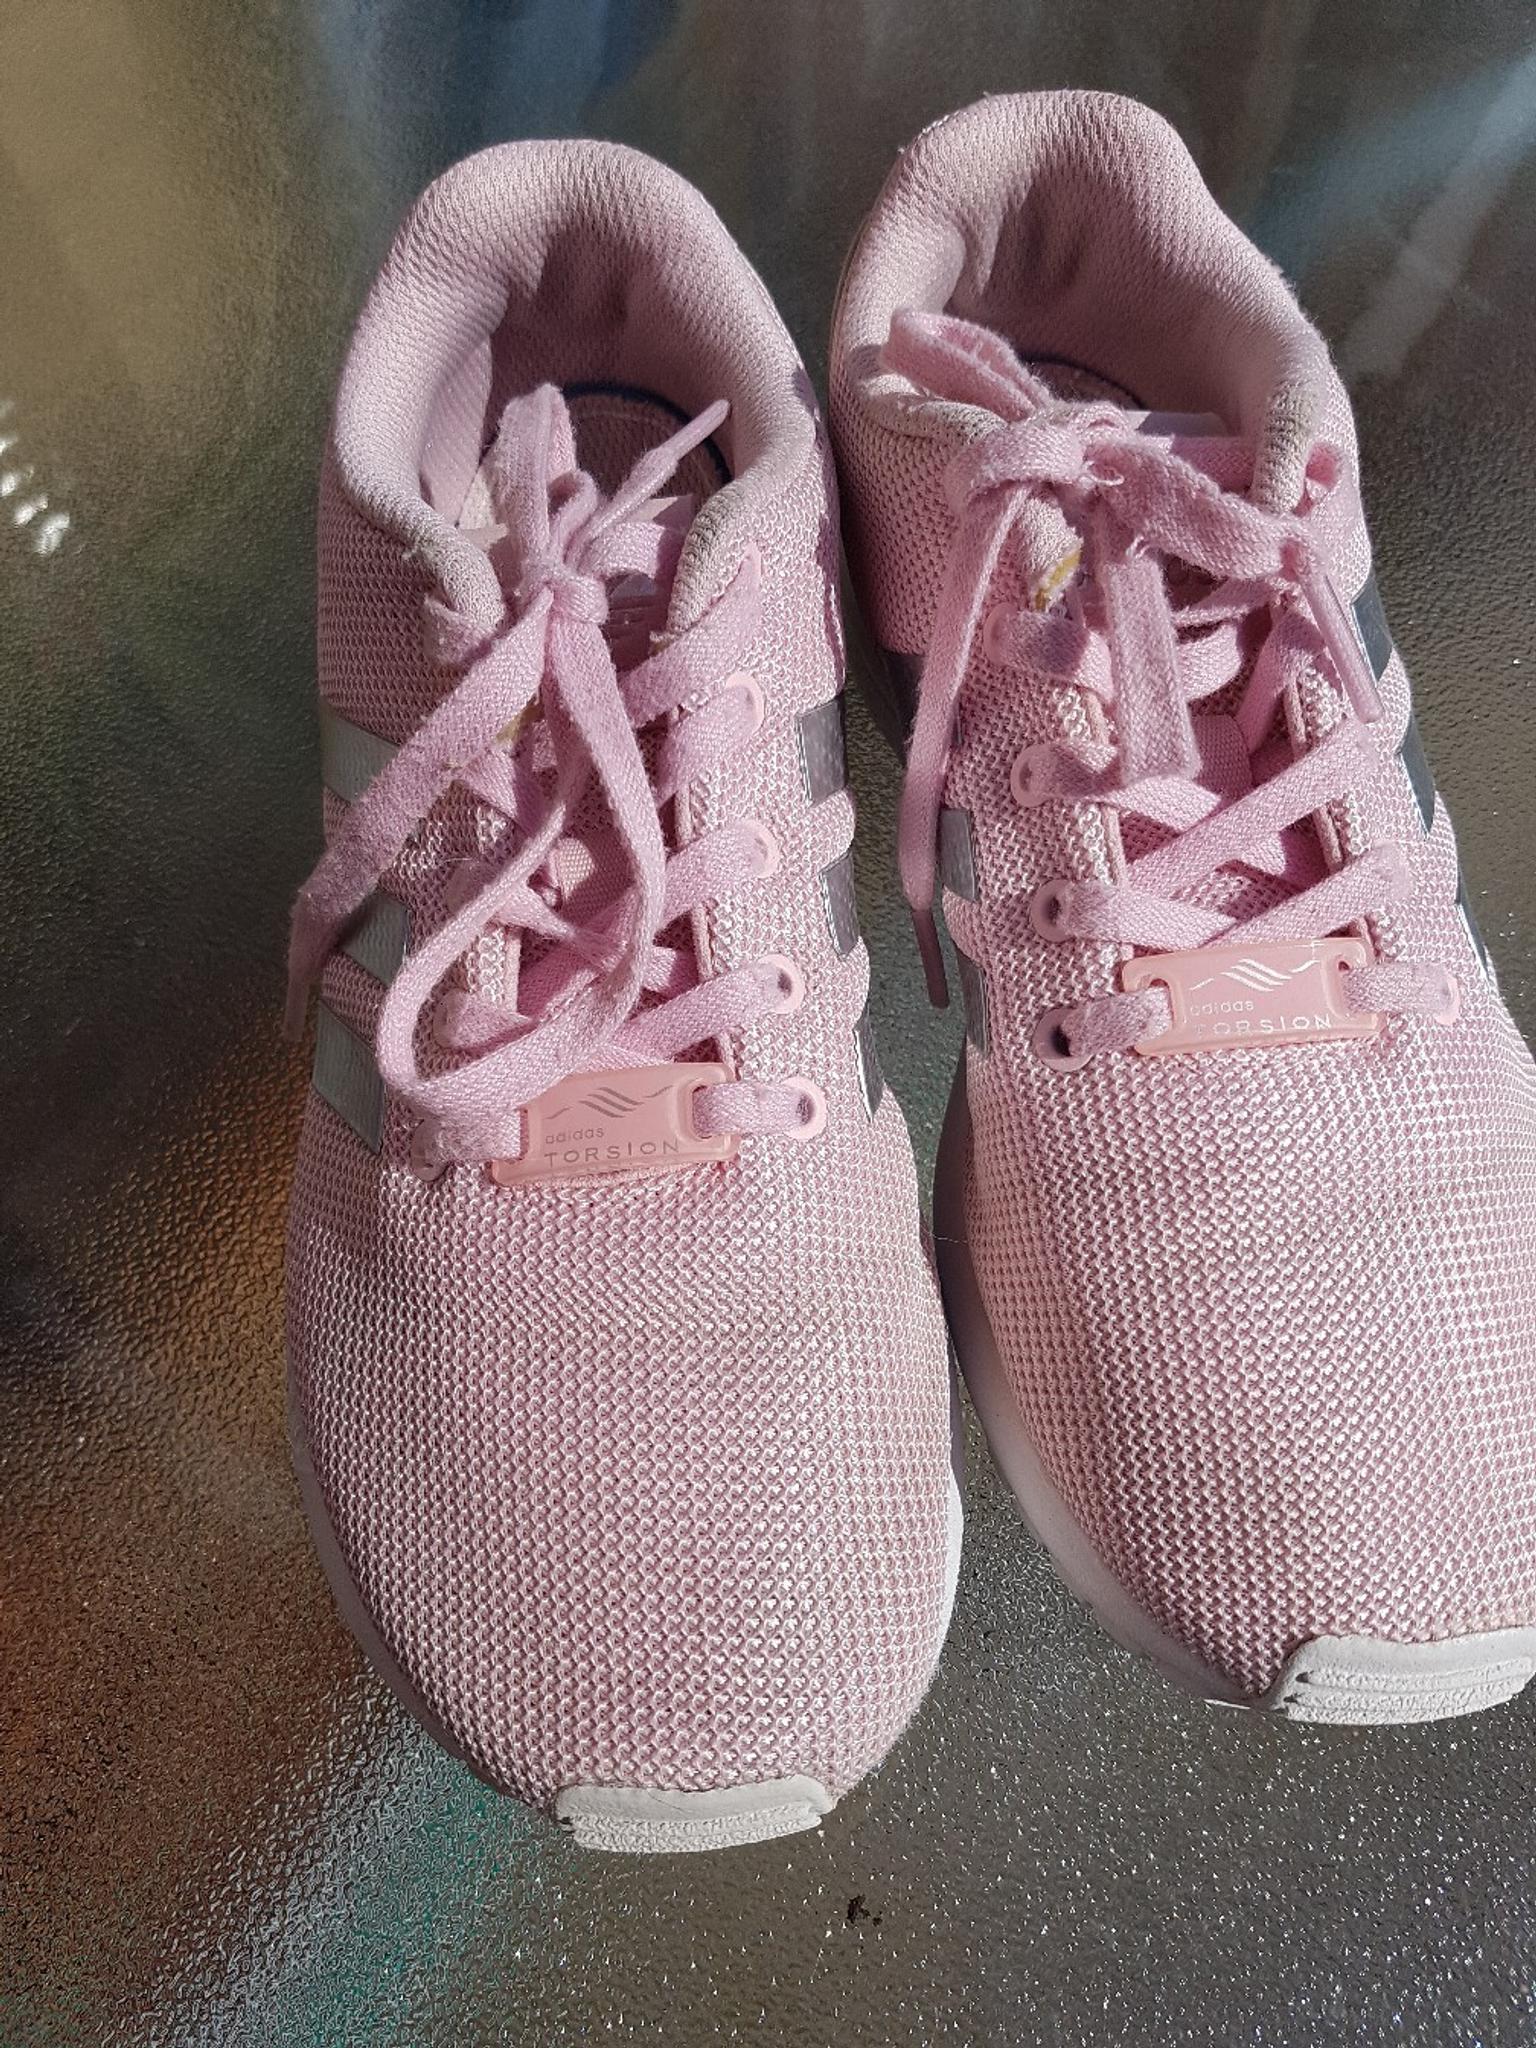 torsion adidas pink